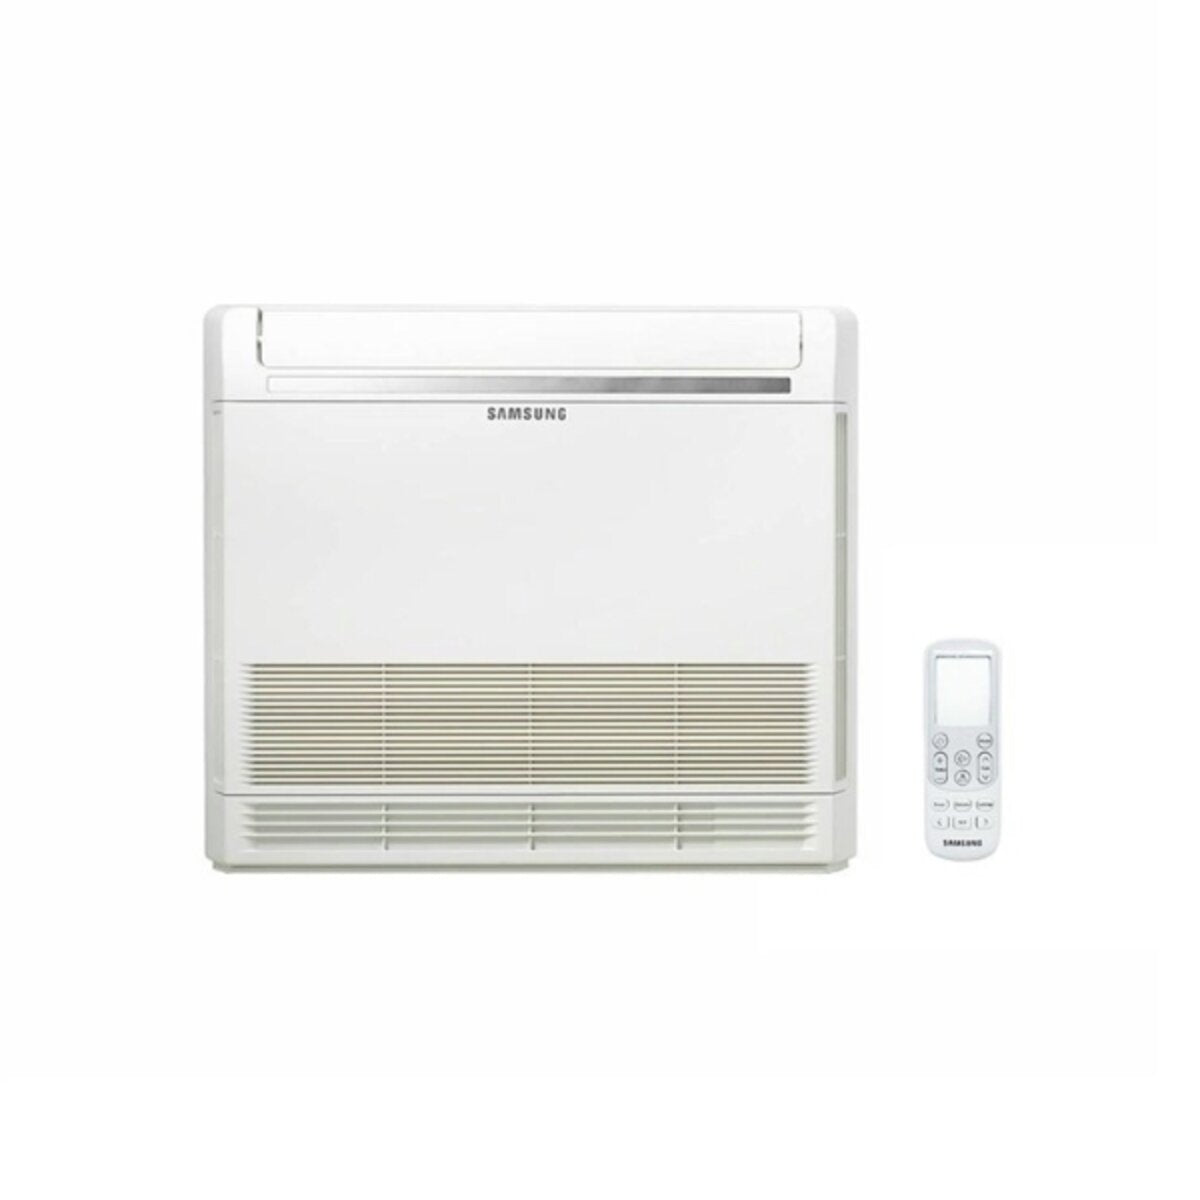 Samsung air conditioner console trial split 9000 + 9000 + 12000 BTU inverter A +++ outdoor unit 5.2 kW